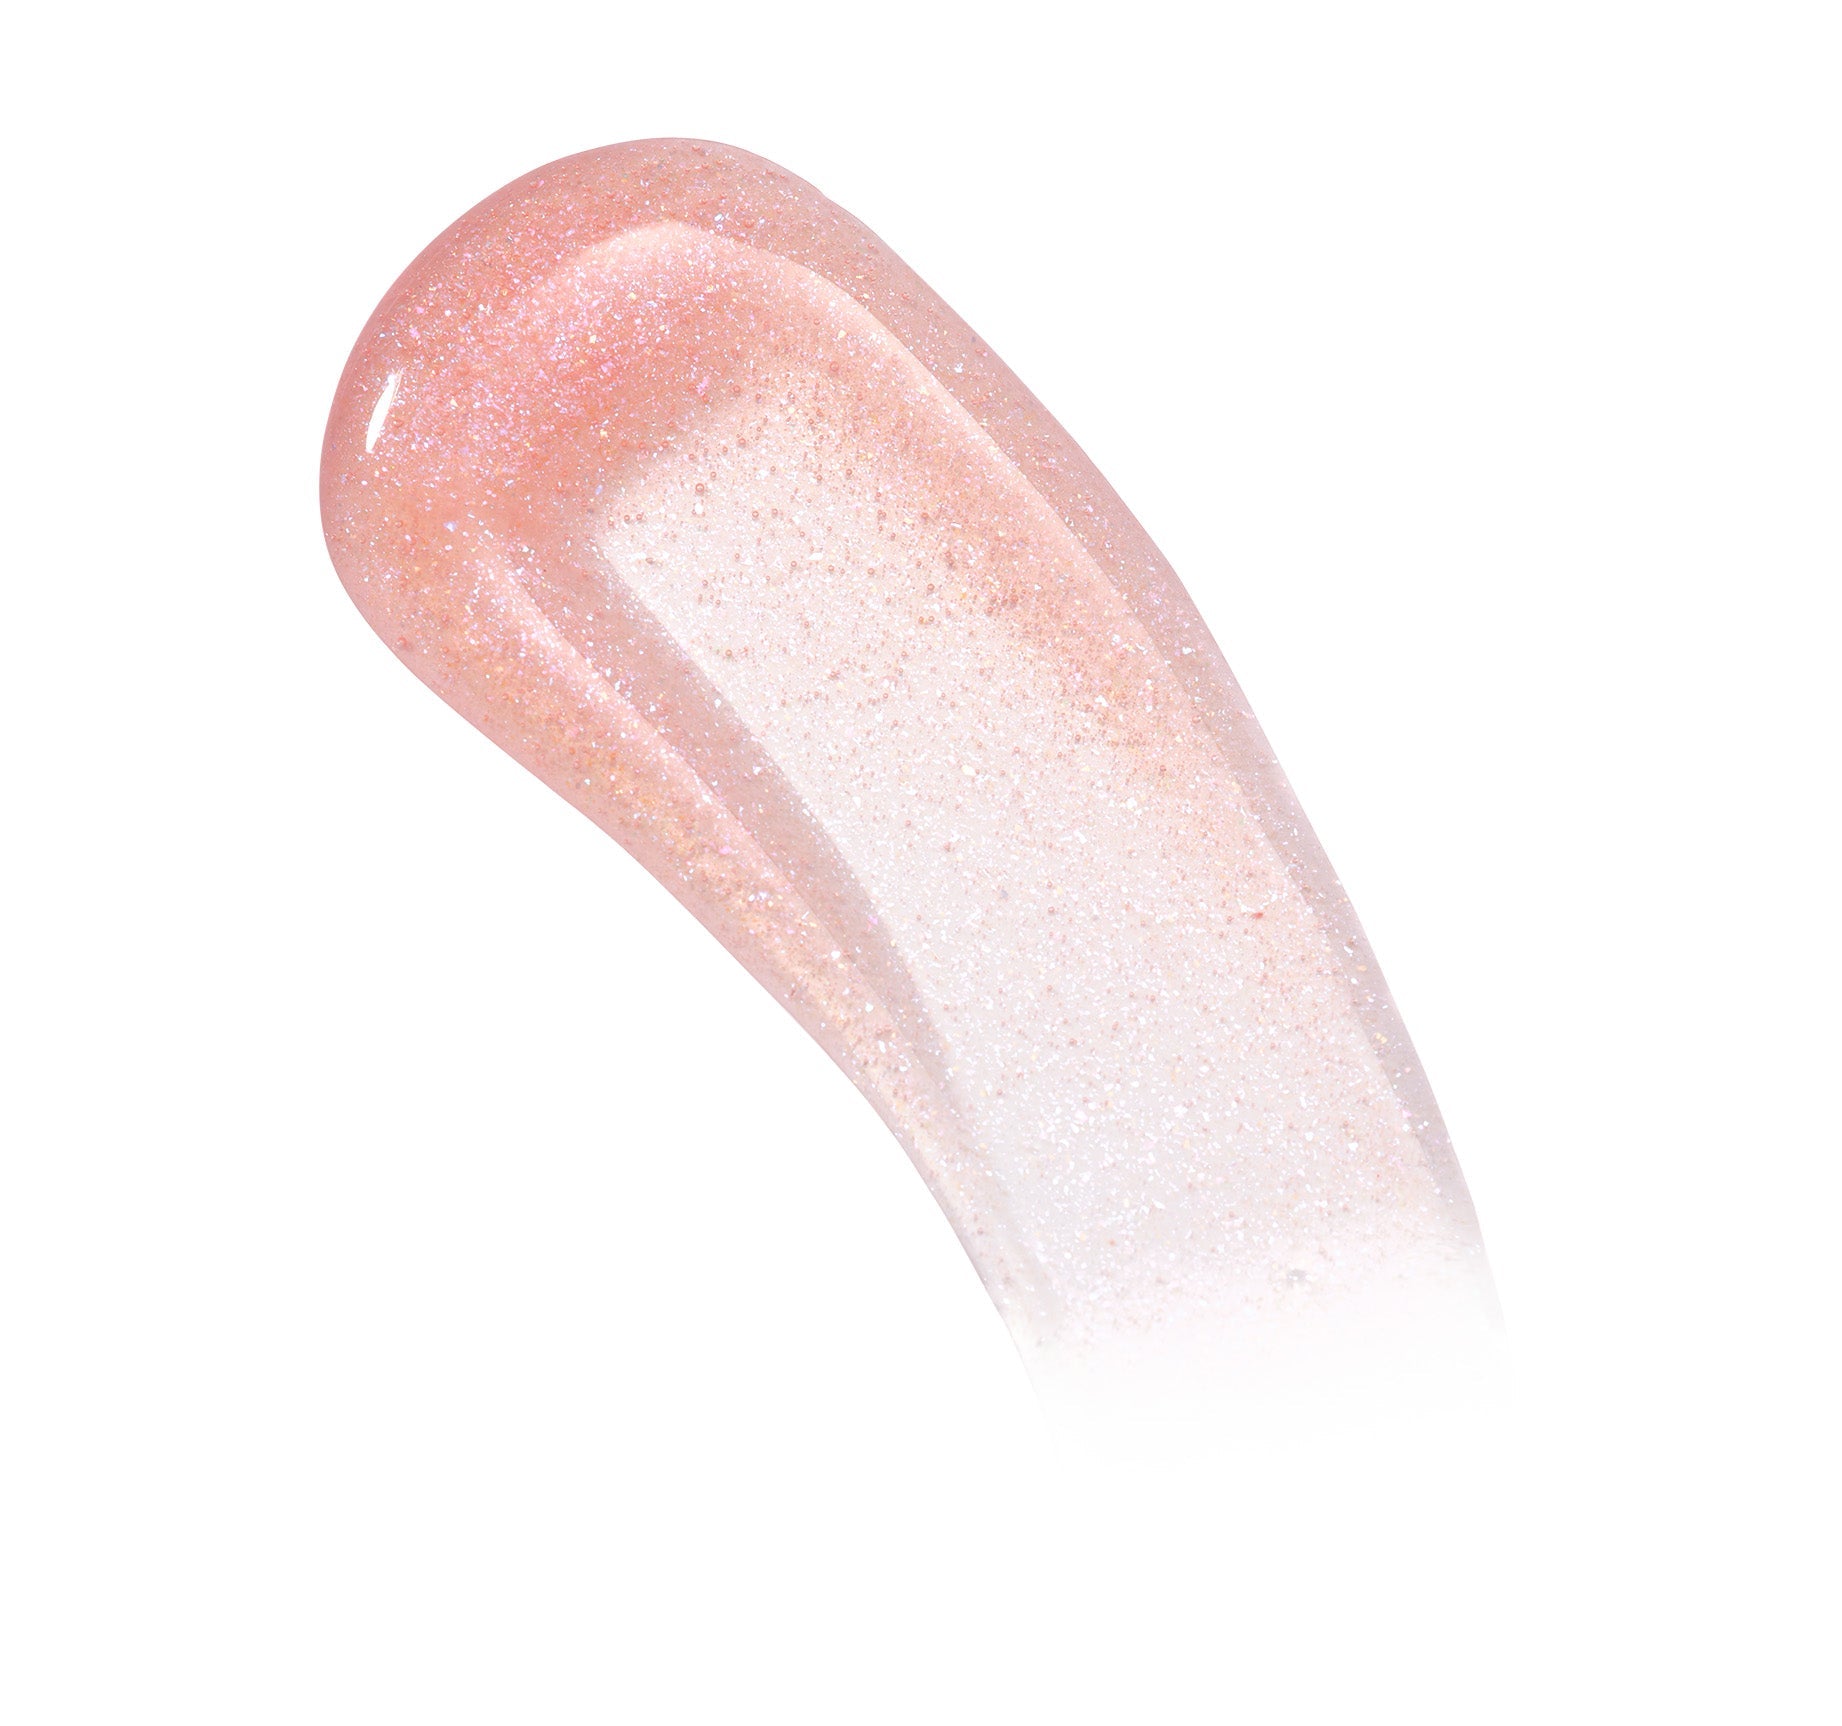 Aurascape Dripglass Glazed Highshine Pearlized Lip Gloss - Frose Bliss - Image 2